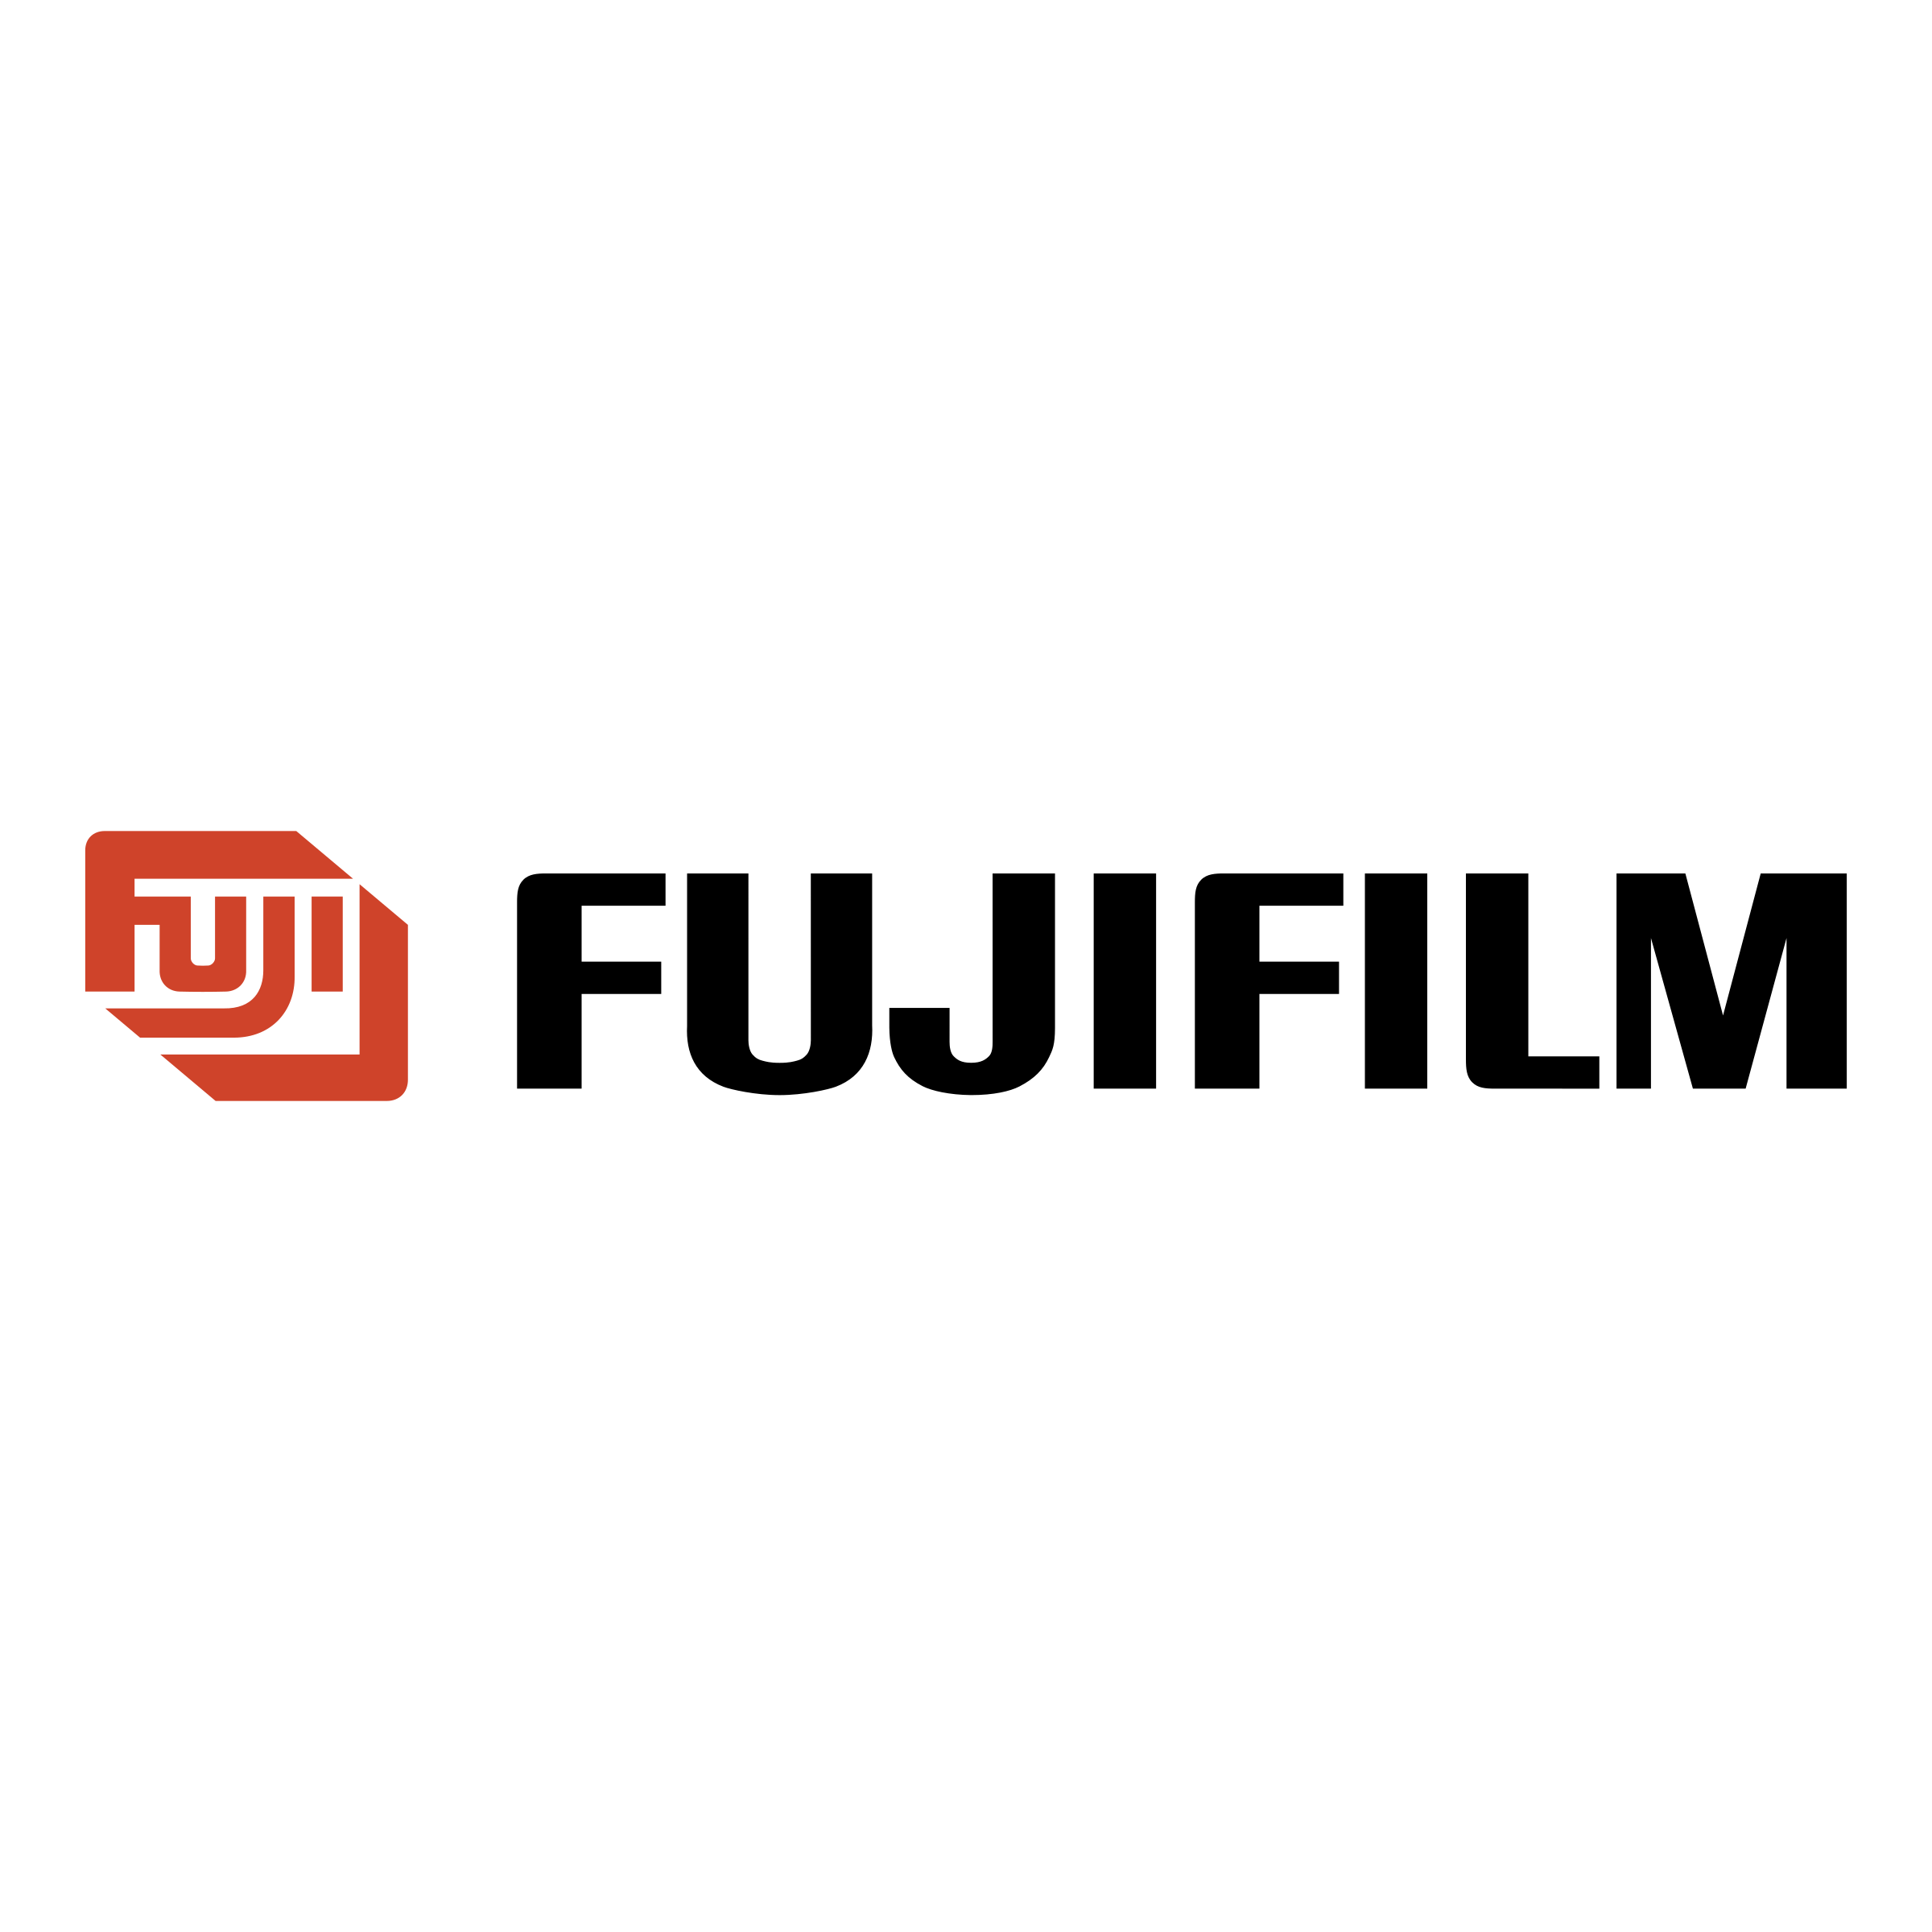 fujifilm-9-logo-png-transparent